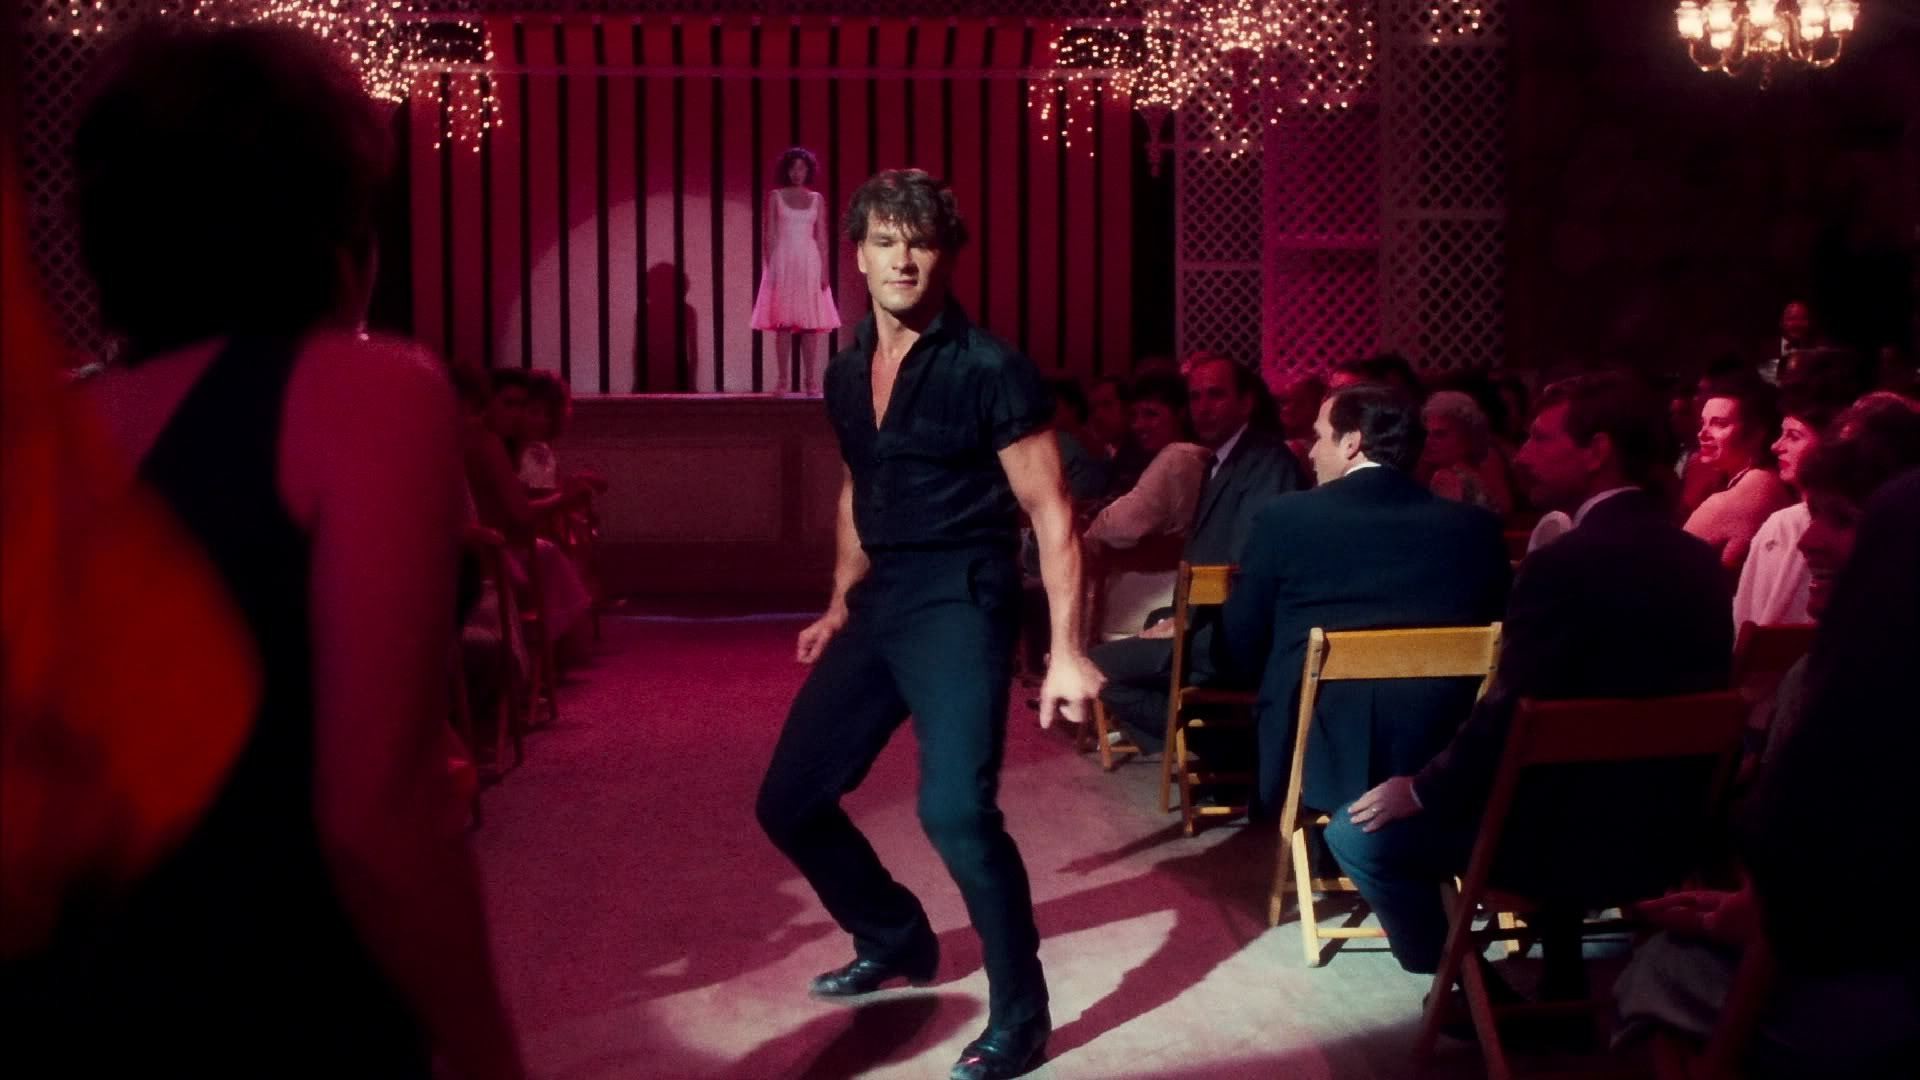 1920x1080 Patrick Swayze in "Dirty Dancing"